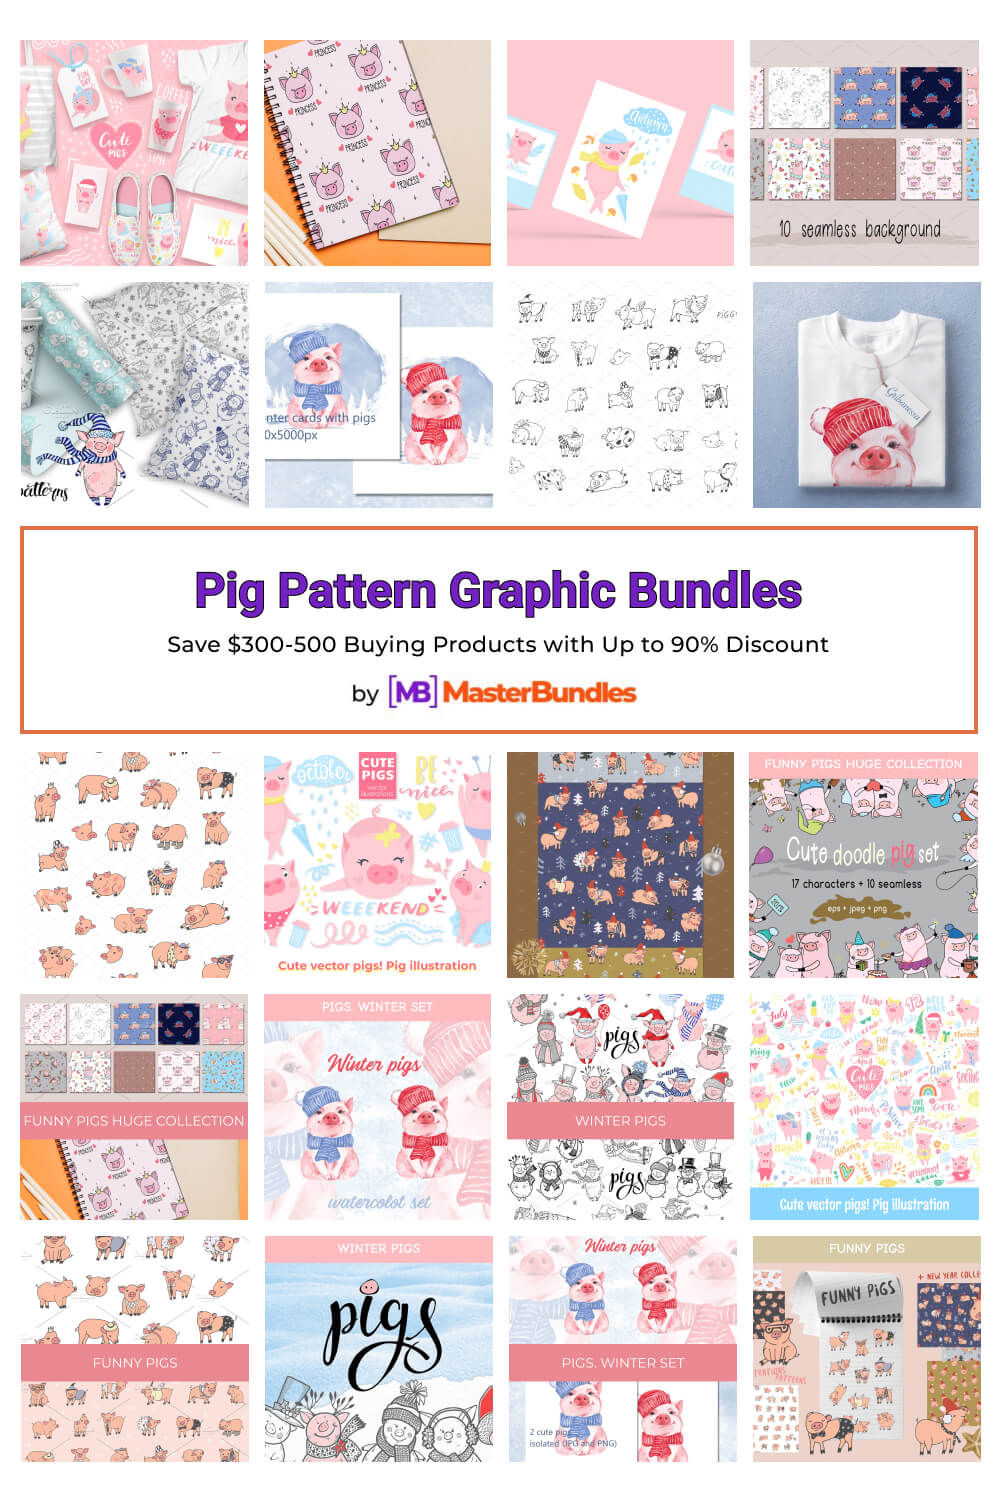 pig pattern graphic bundles pinterest image.